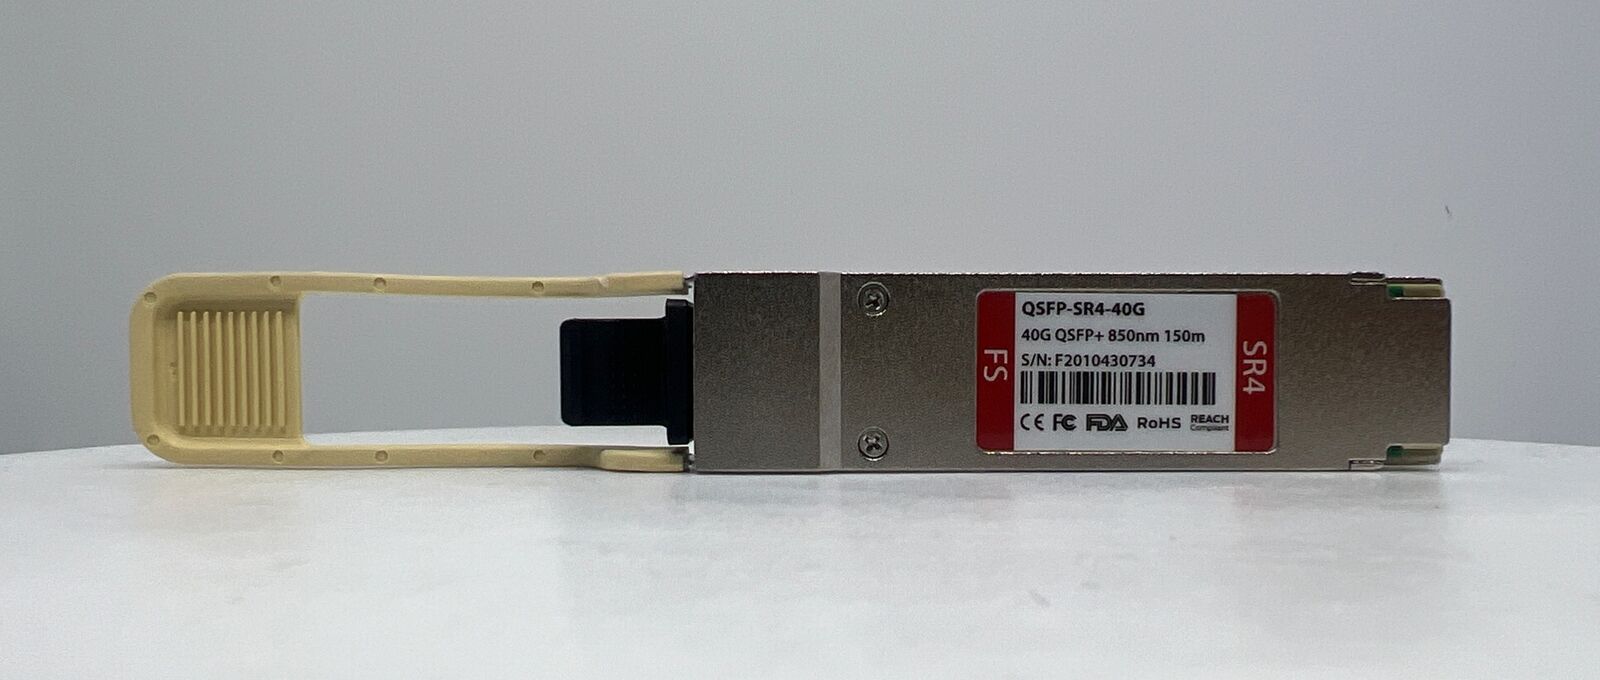 FS QSFP-SR4-40G QSFP+ 850nm 150m Transceiver Module